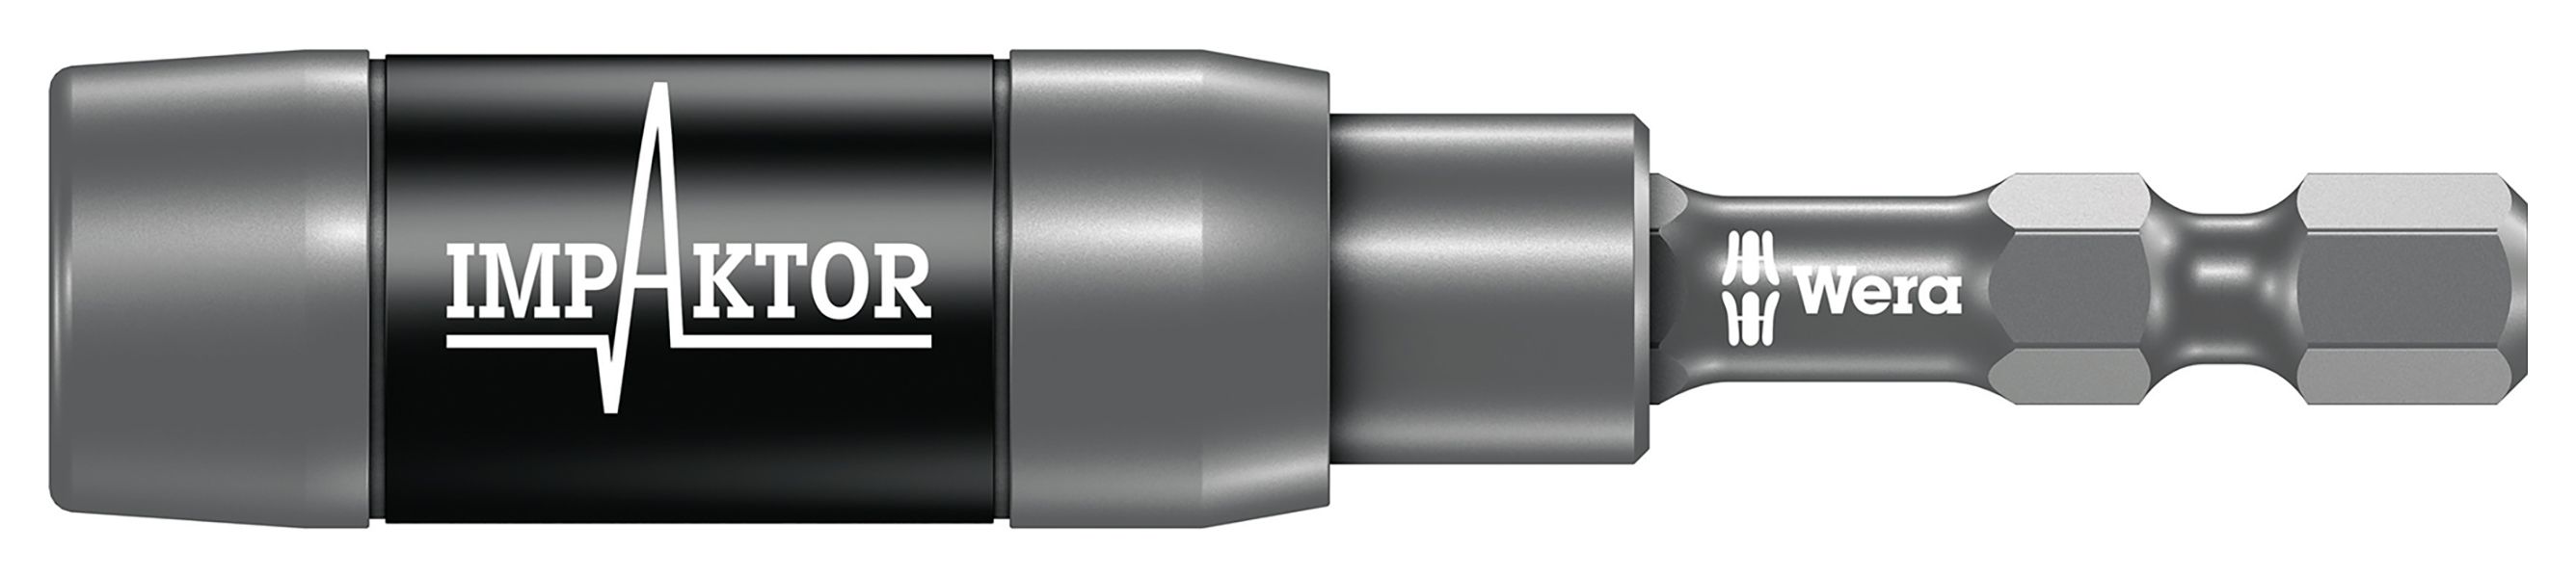 Wera 897/4 IMP R SB Impaktor TriTorsion Bit Holder with Retaining Ring - 1/4in x 75mm